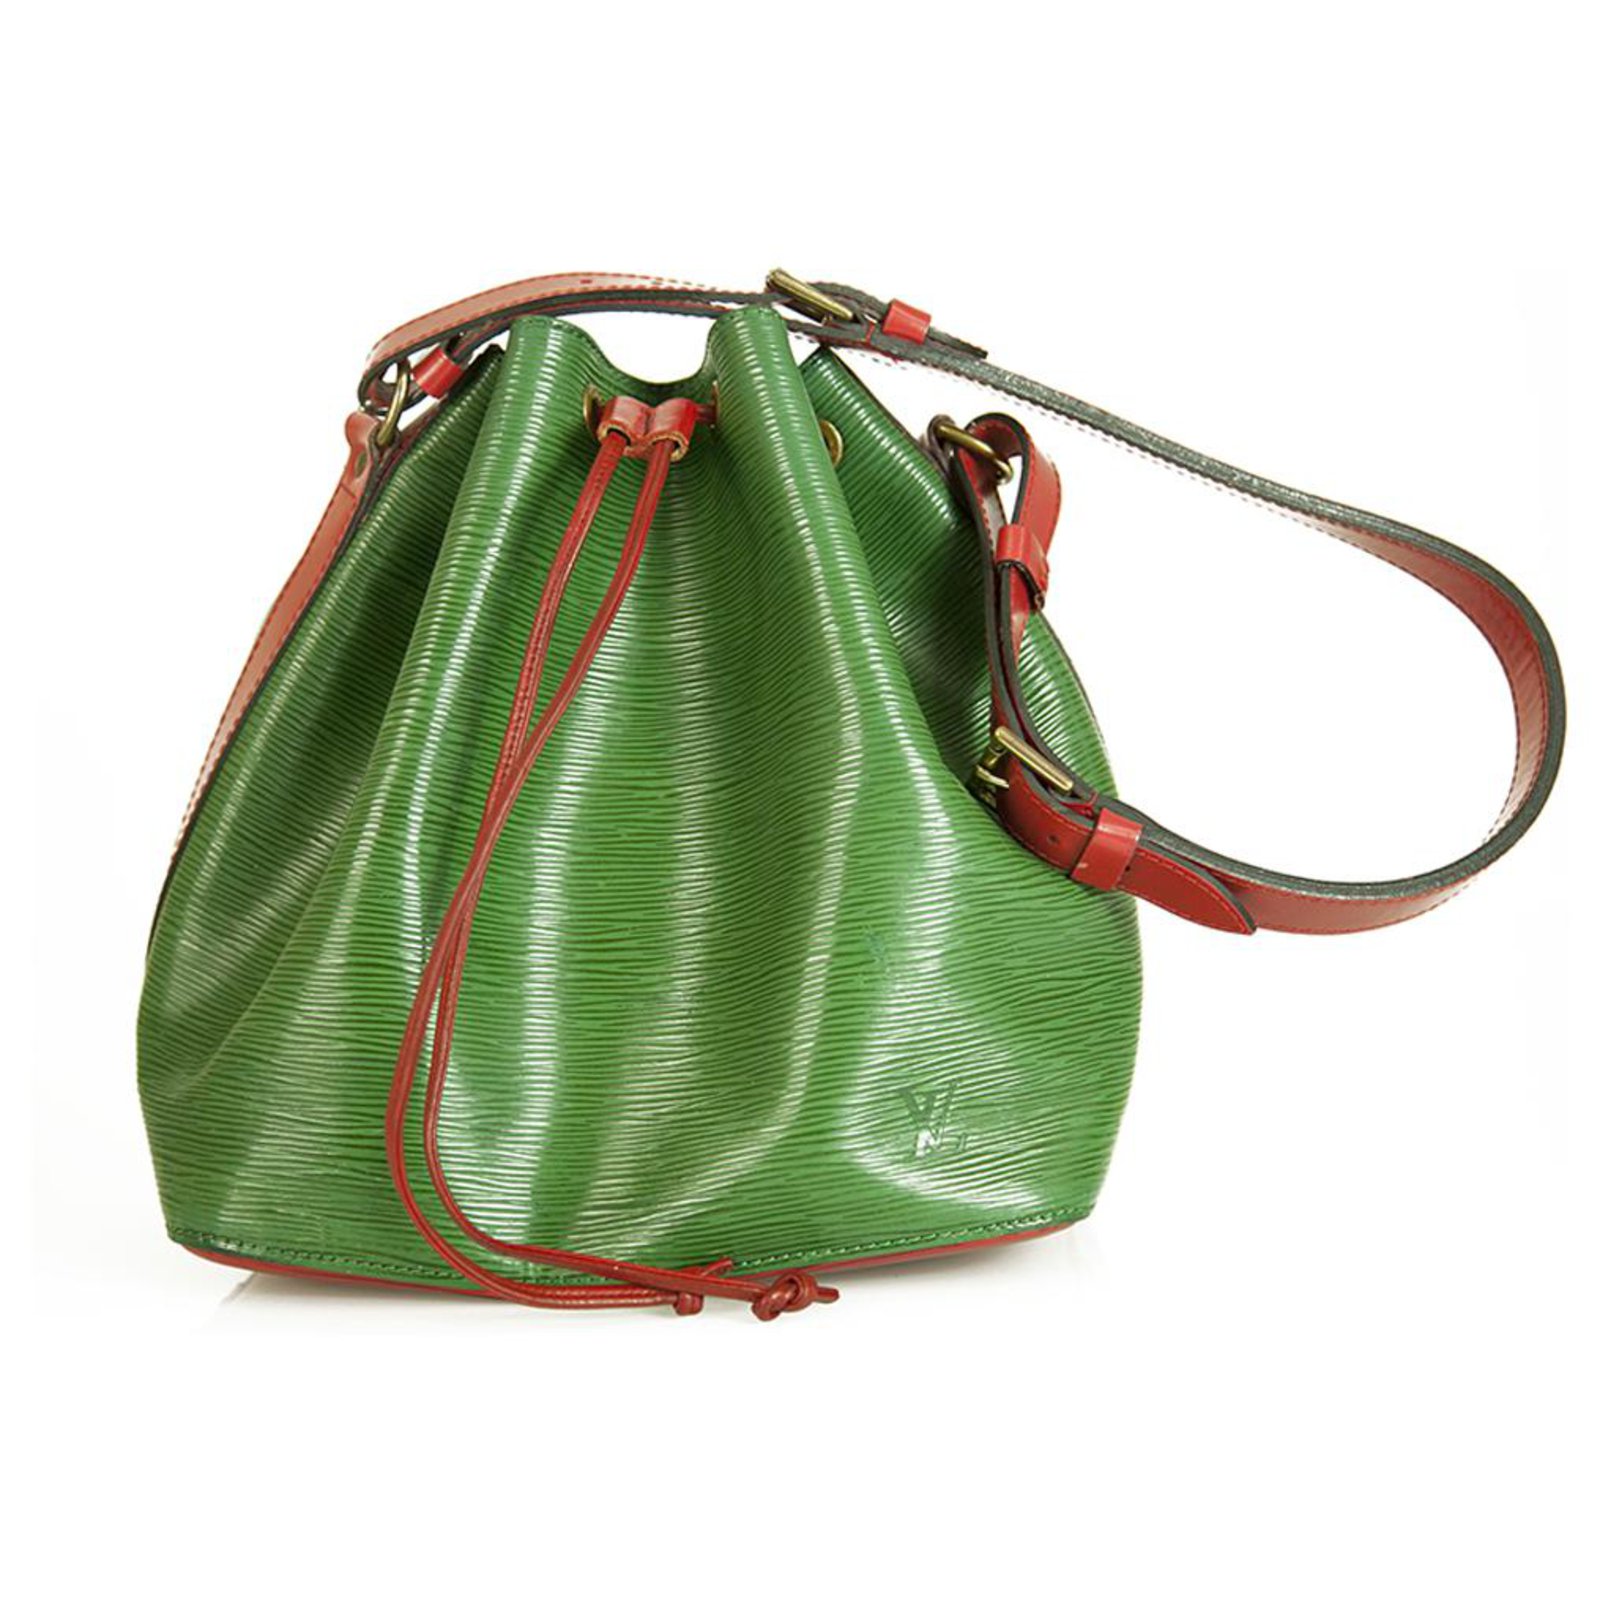 LOUIS VUITTON Epi Petit Noe Bicolor Green Red handbag Bucket bag